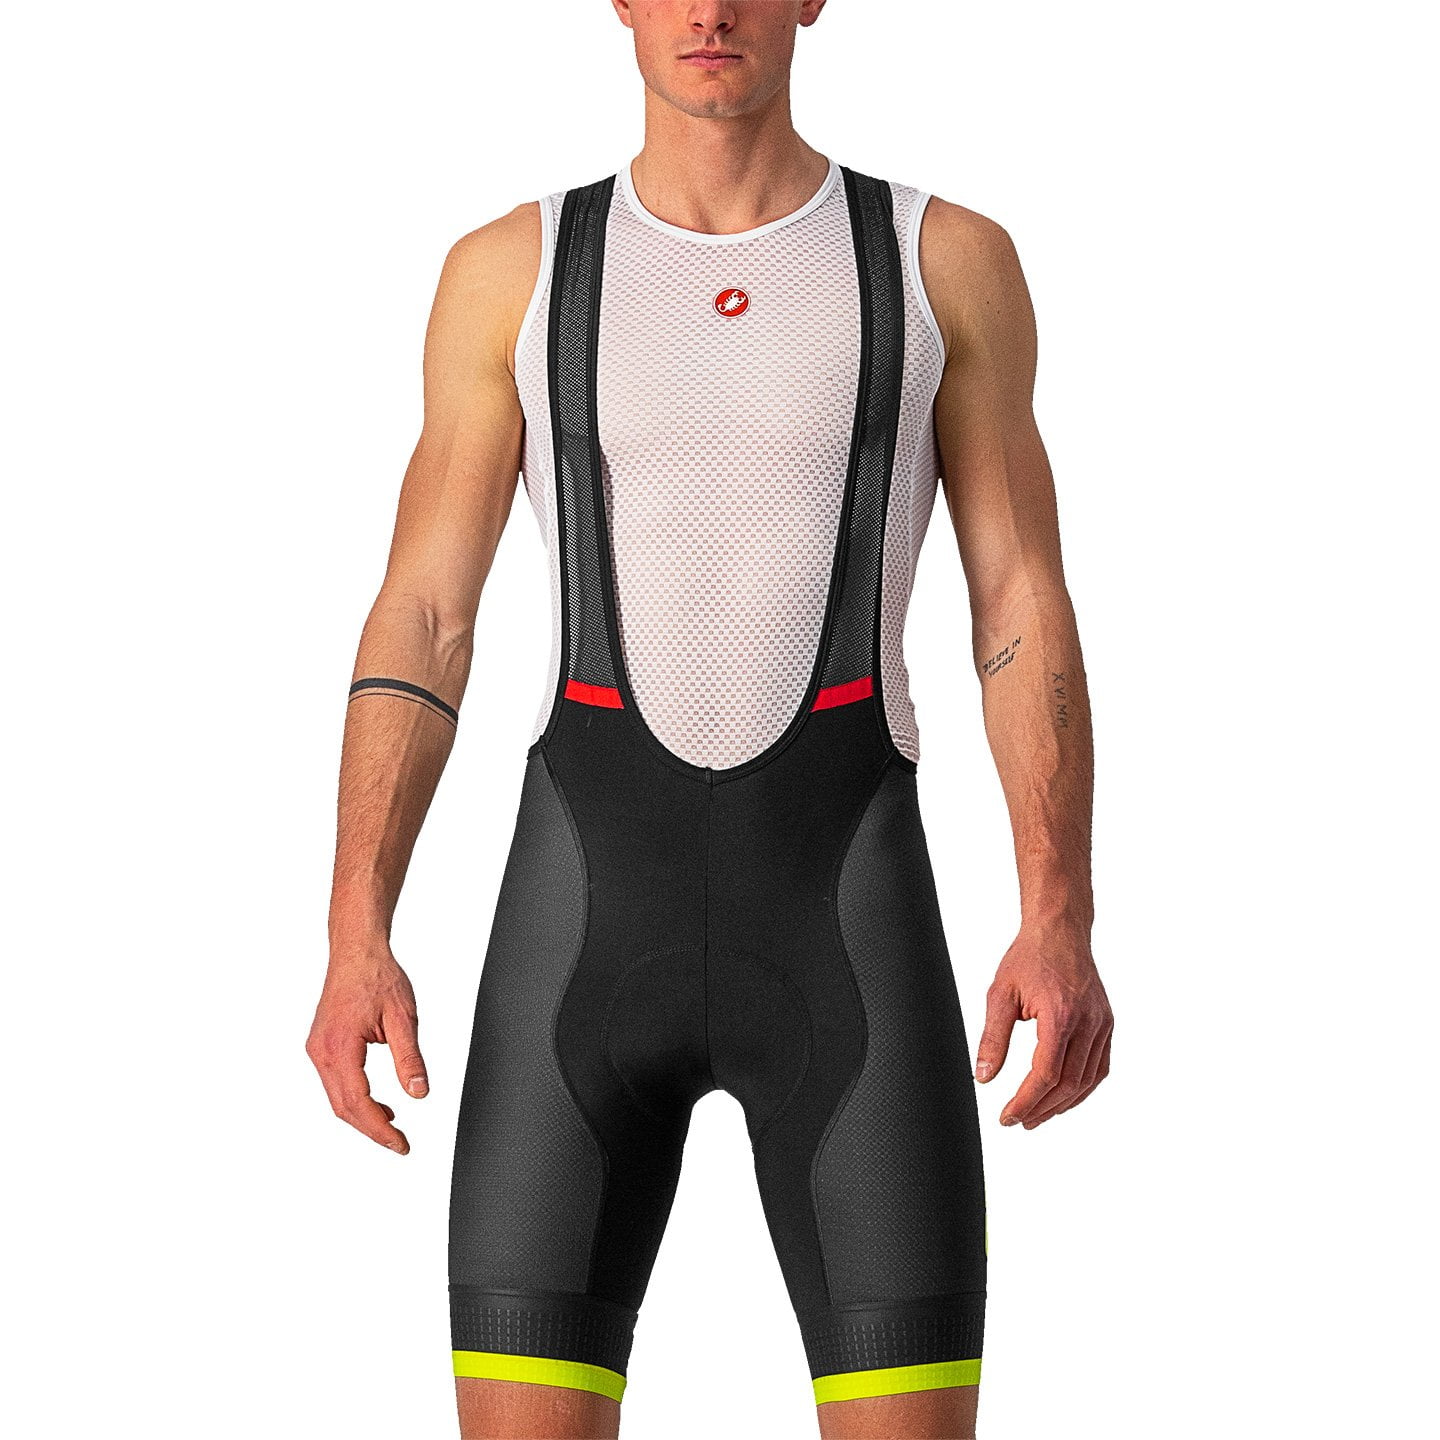 Competizione Kit Bib Shorts Bib Shorts, for men, size L, Cycle shorts, Cycling clothing